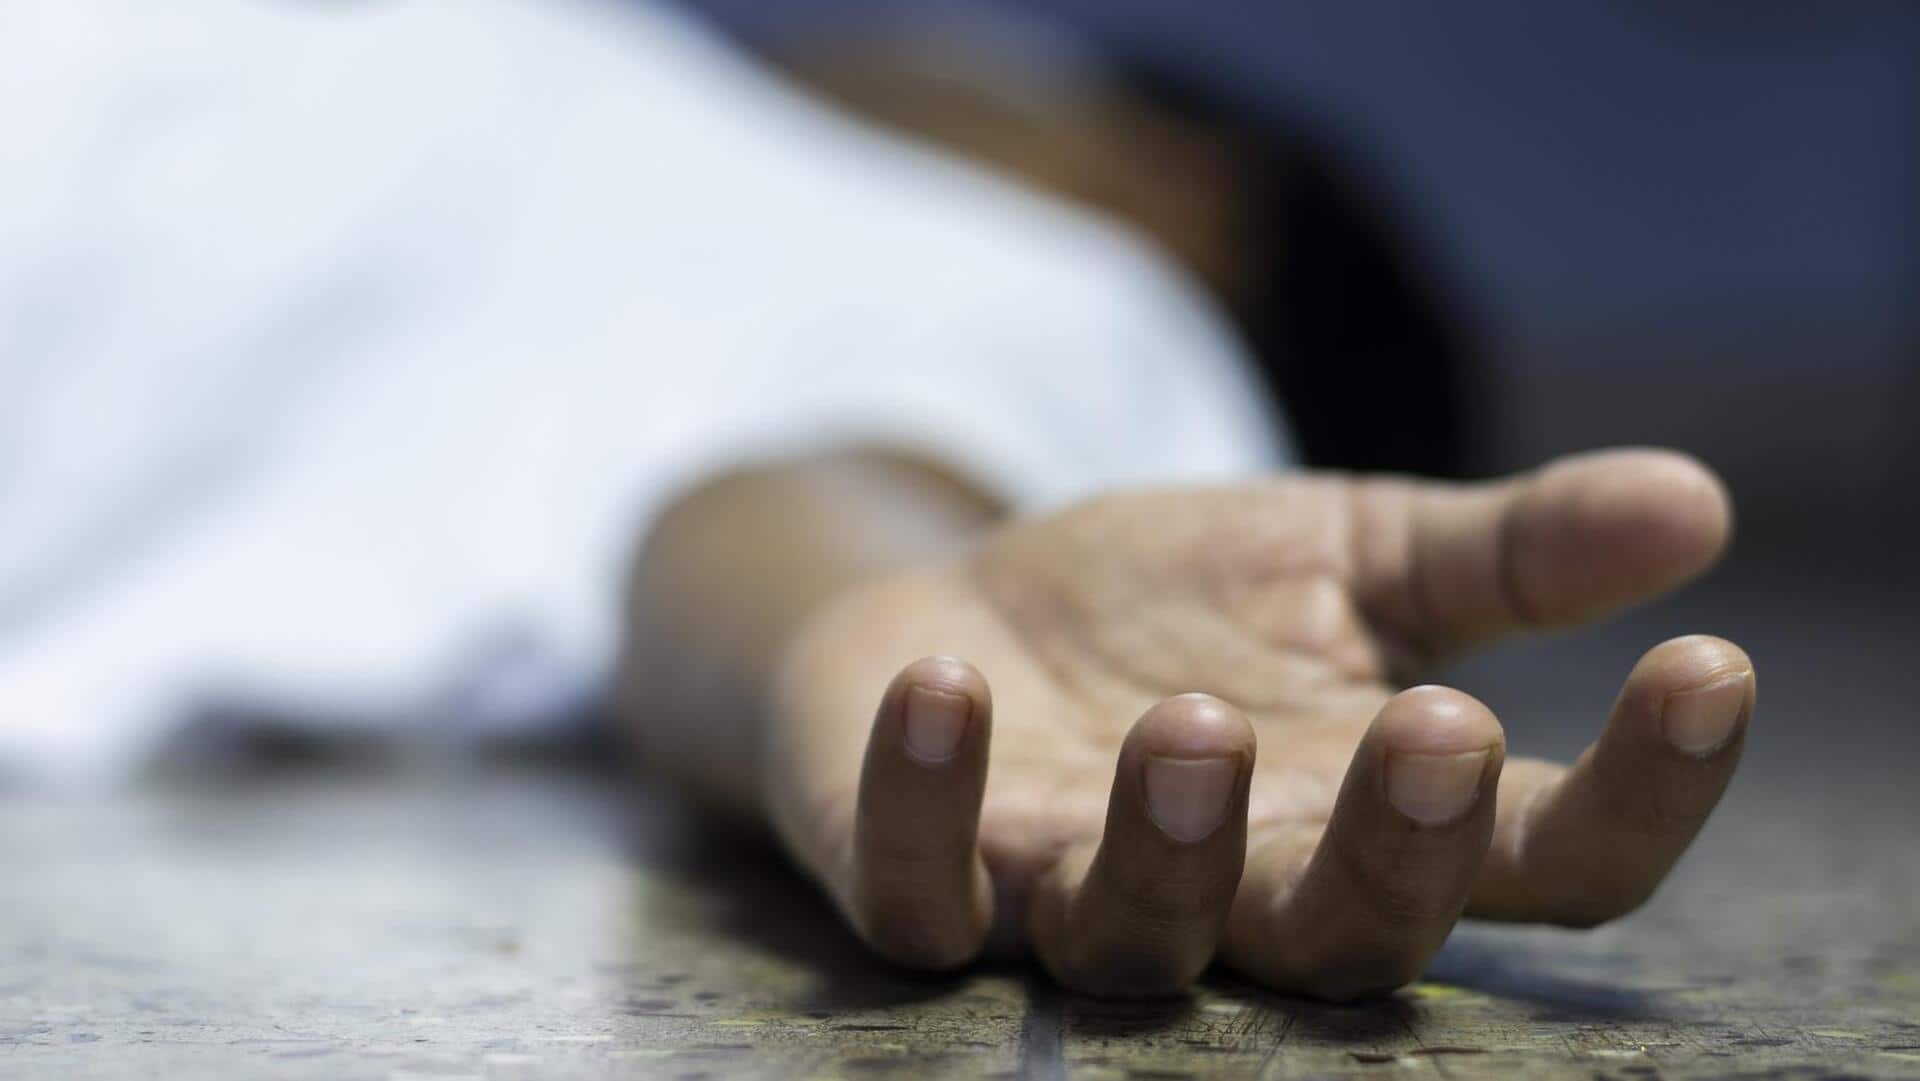 मध्य प्रदेश: 2 साल पहले कोरोना महामारी में मृत घोषित युवक निकला जिंदा